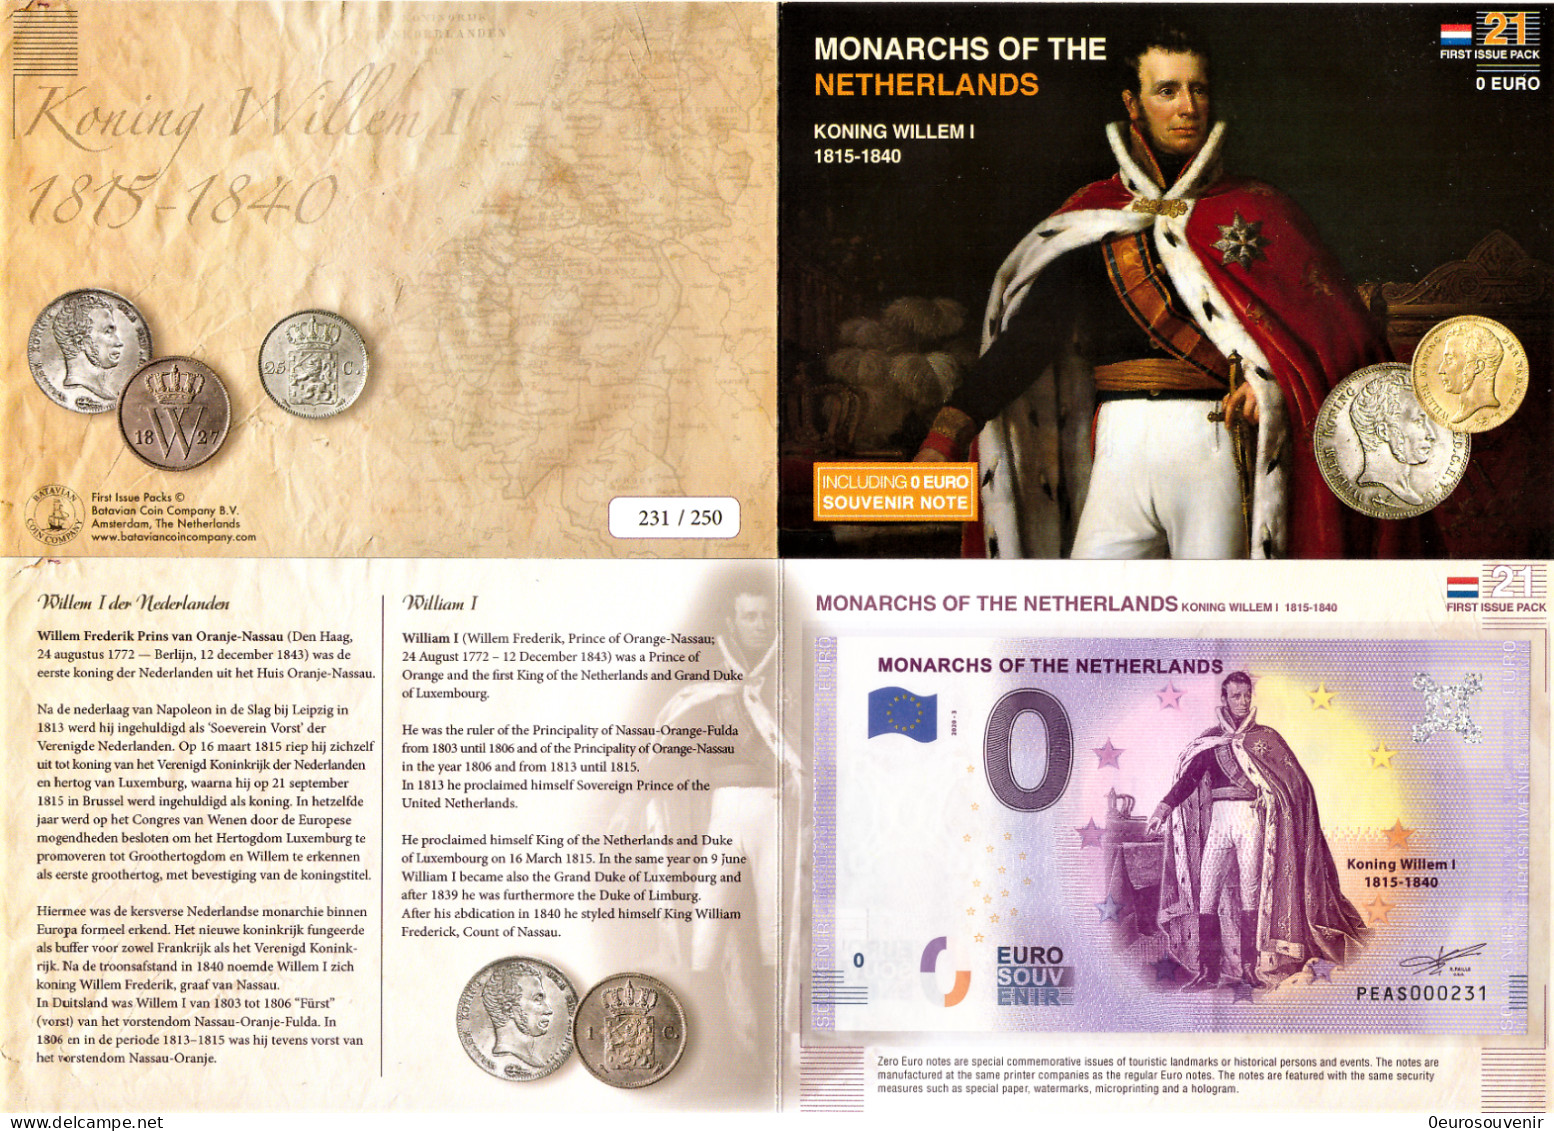 0-Euro PEAS 2020-3 MONARCHS OF THE NETHERLANDS WILLEM I 1815-1840 First Issue Pack No. Nur Bis #250 ! - Essais Privés / Non-officiels